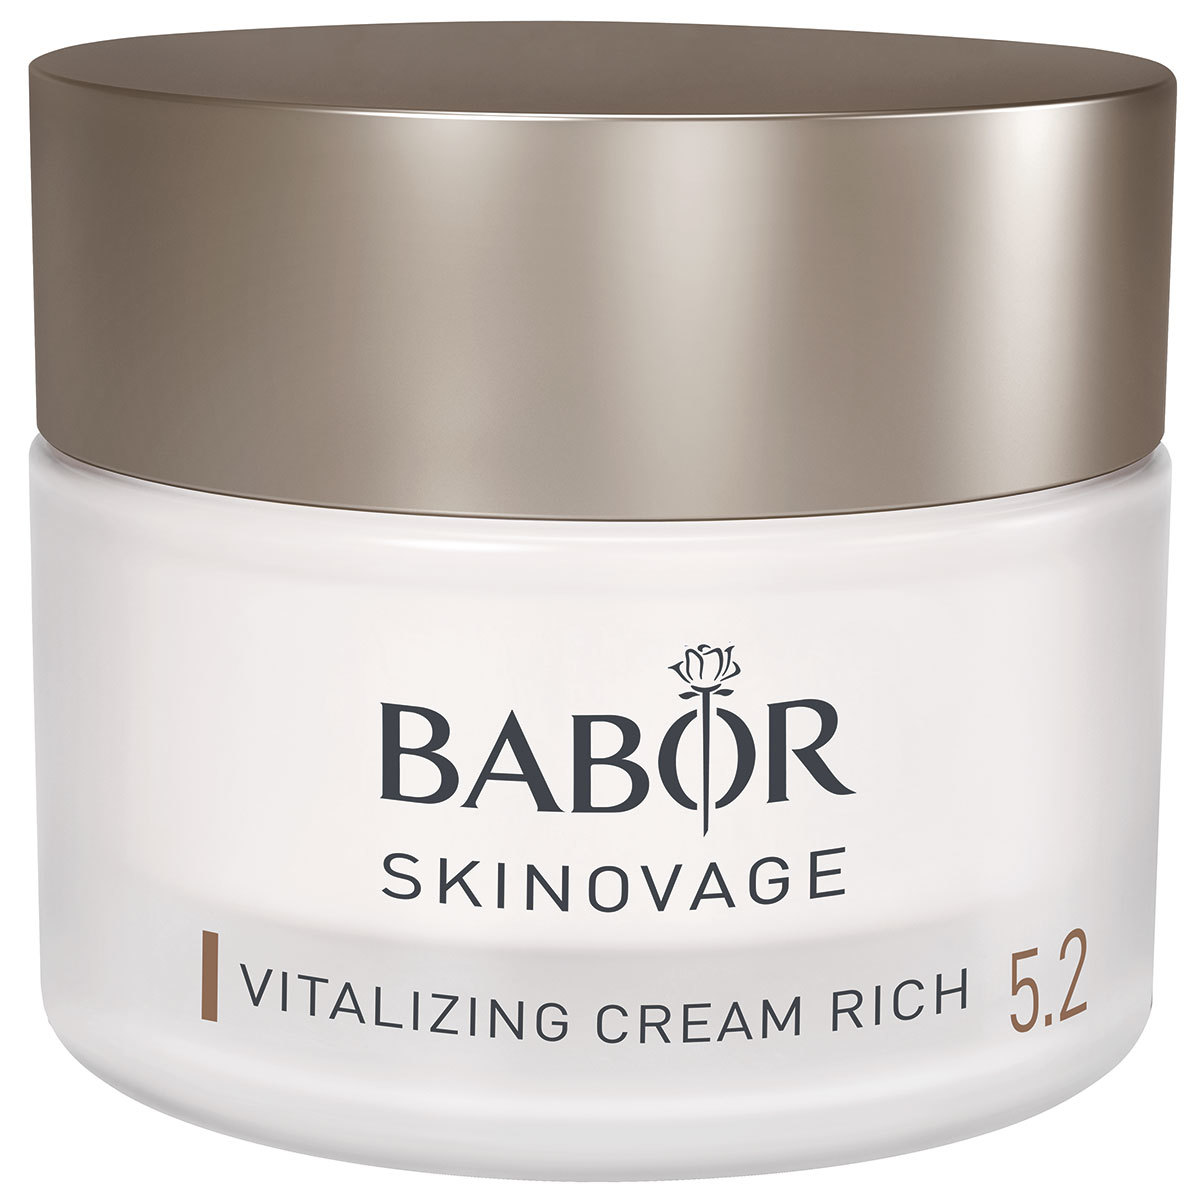 Крем Babor Skinovage Vitalizing Cream Rich 5.2 50ml